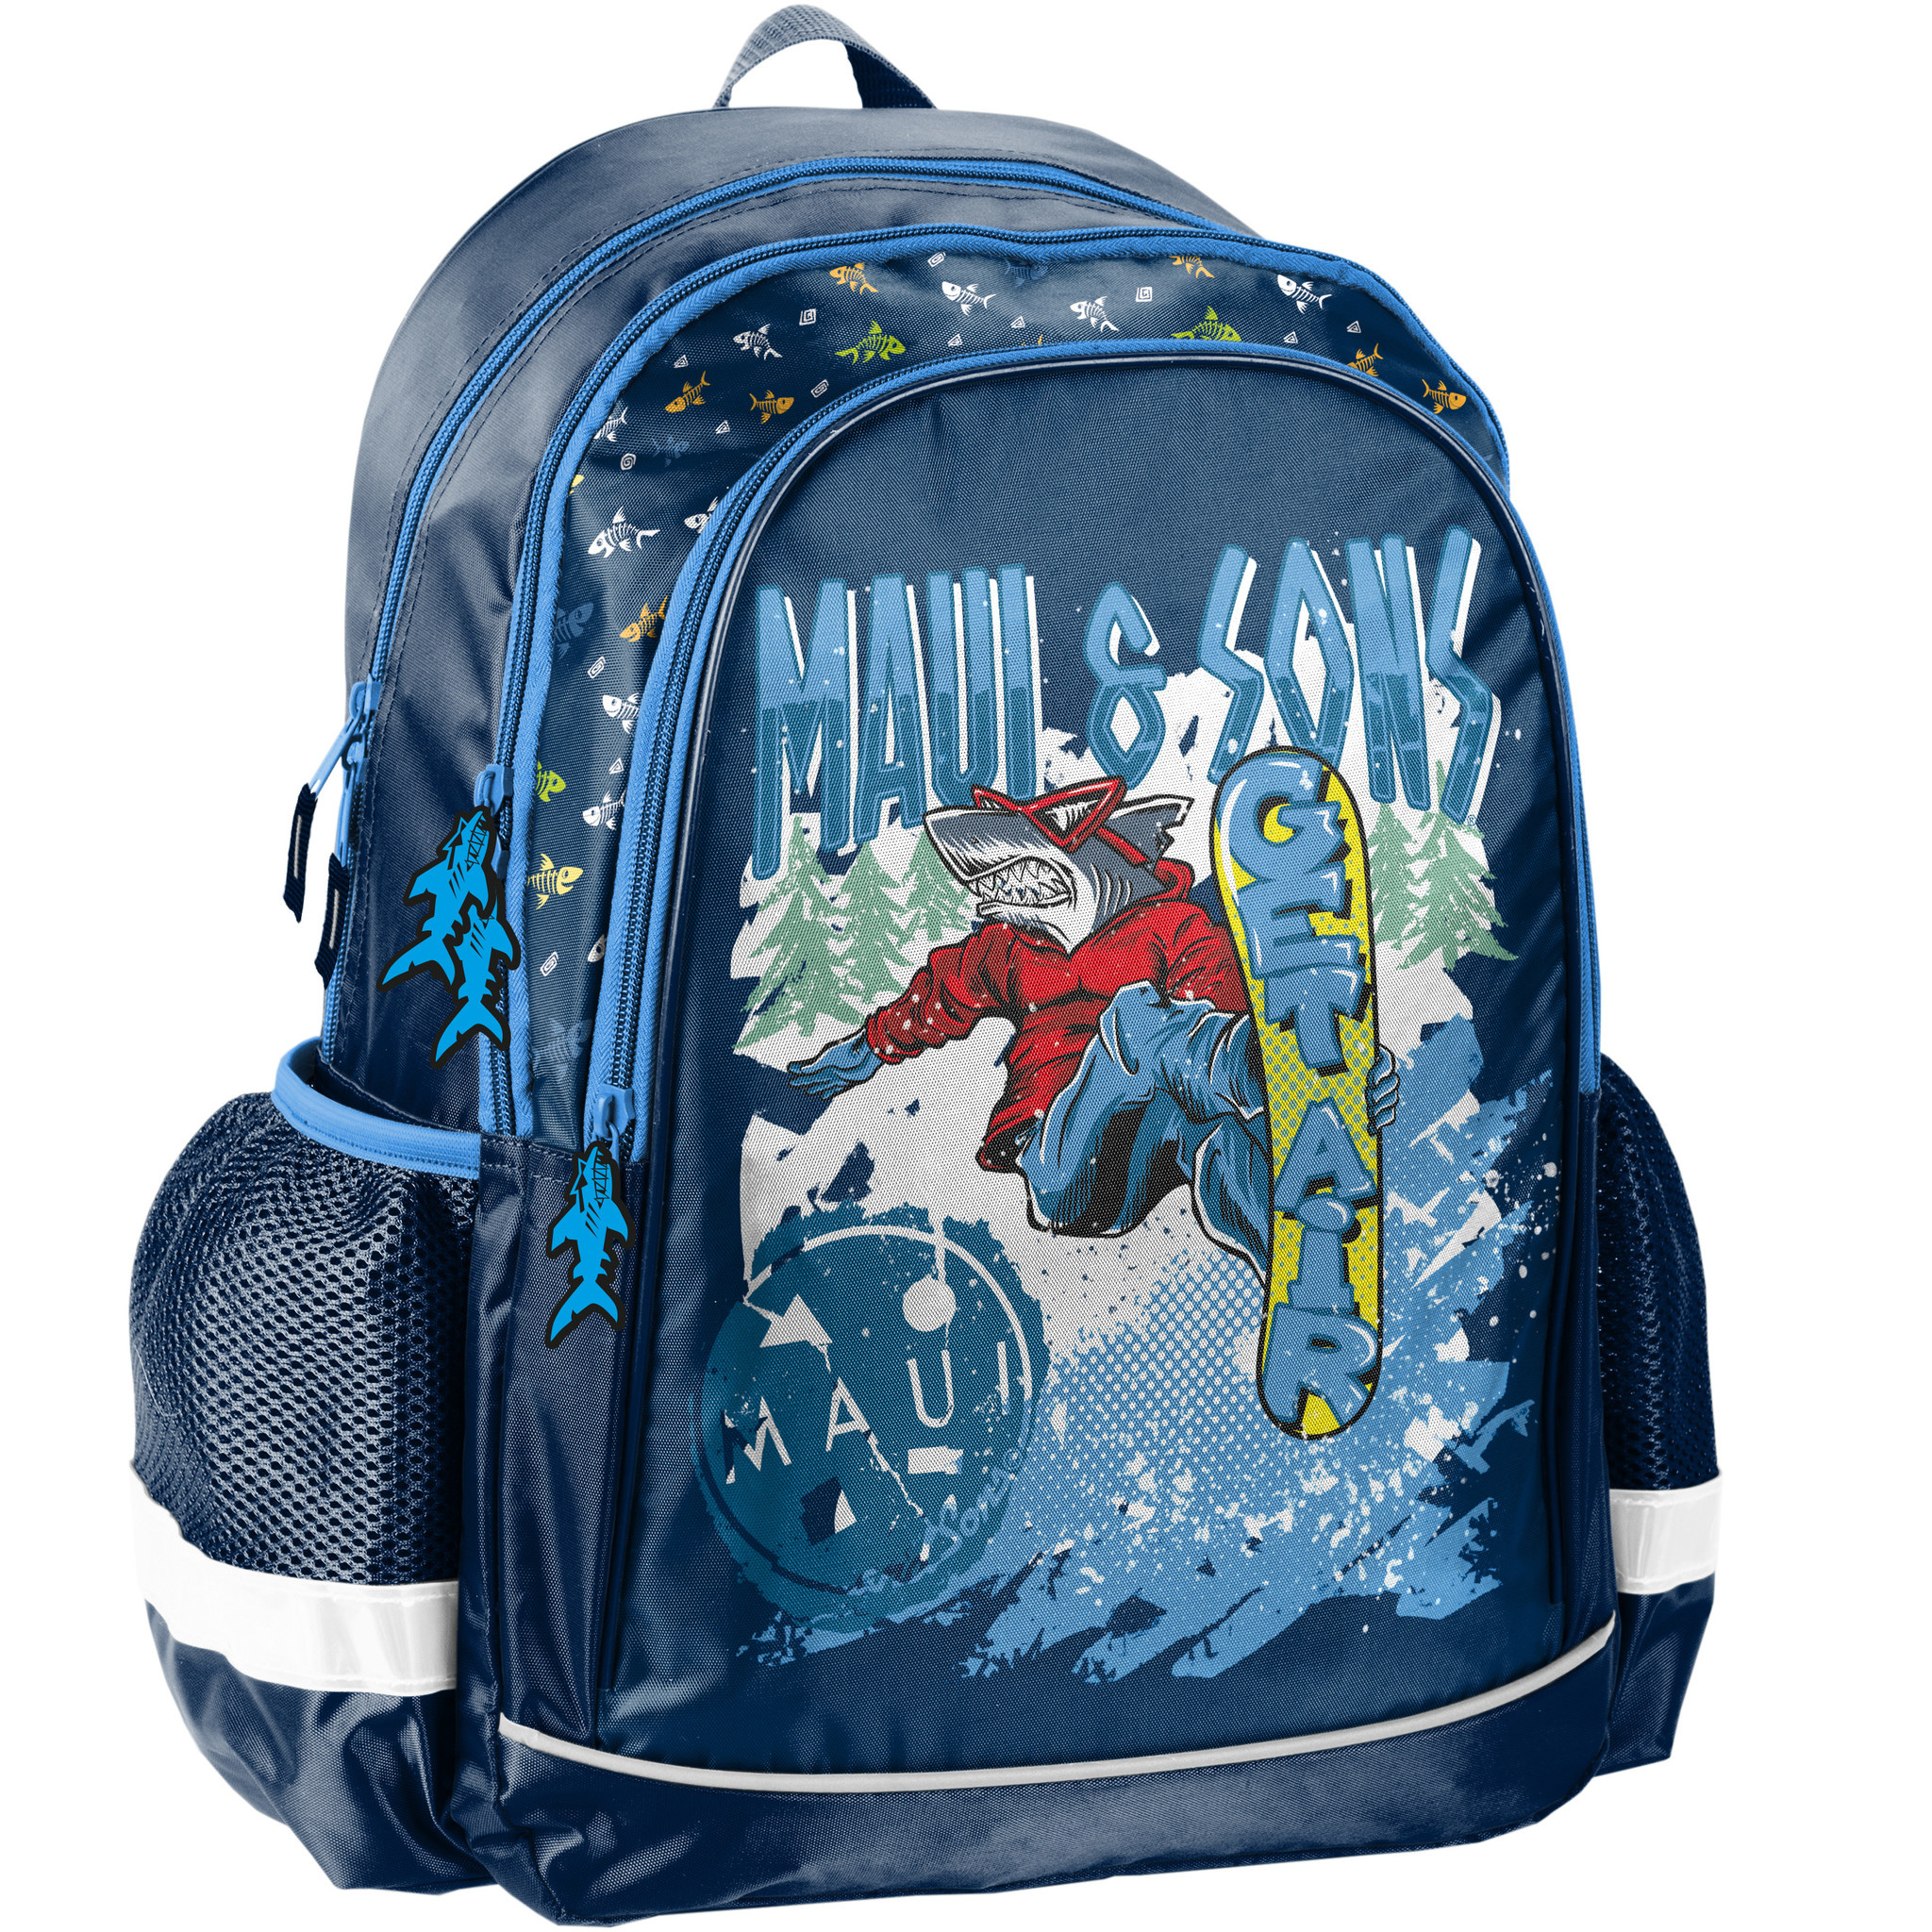 Maui Get Air - Backpack - 42 x 30 x 18 cm - Multi